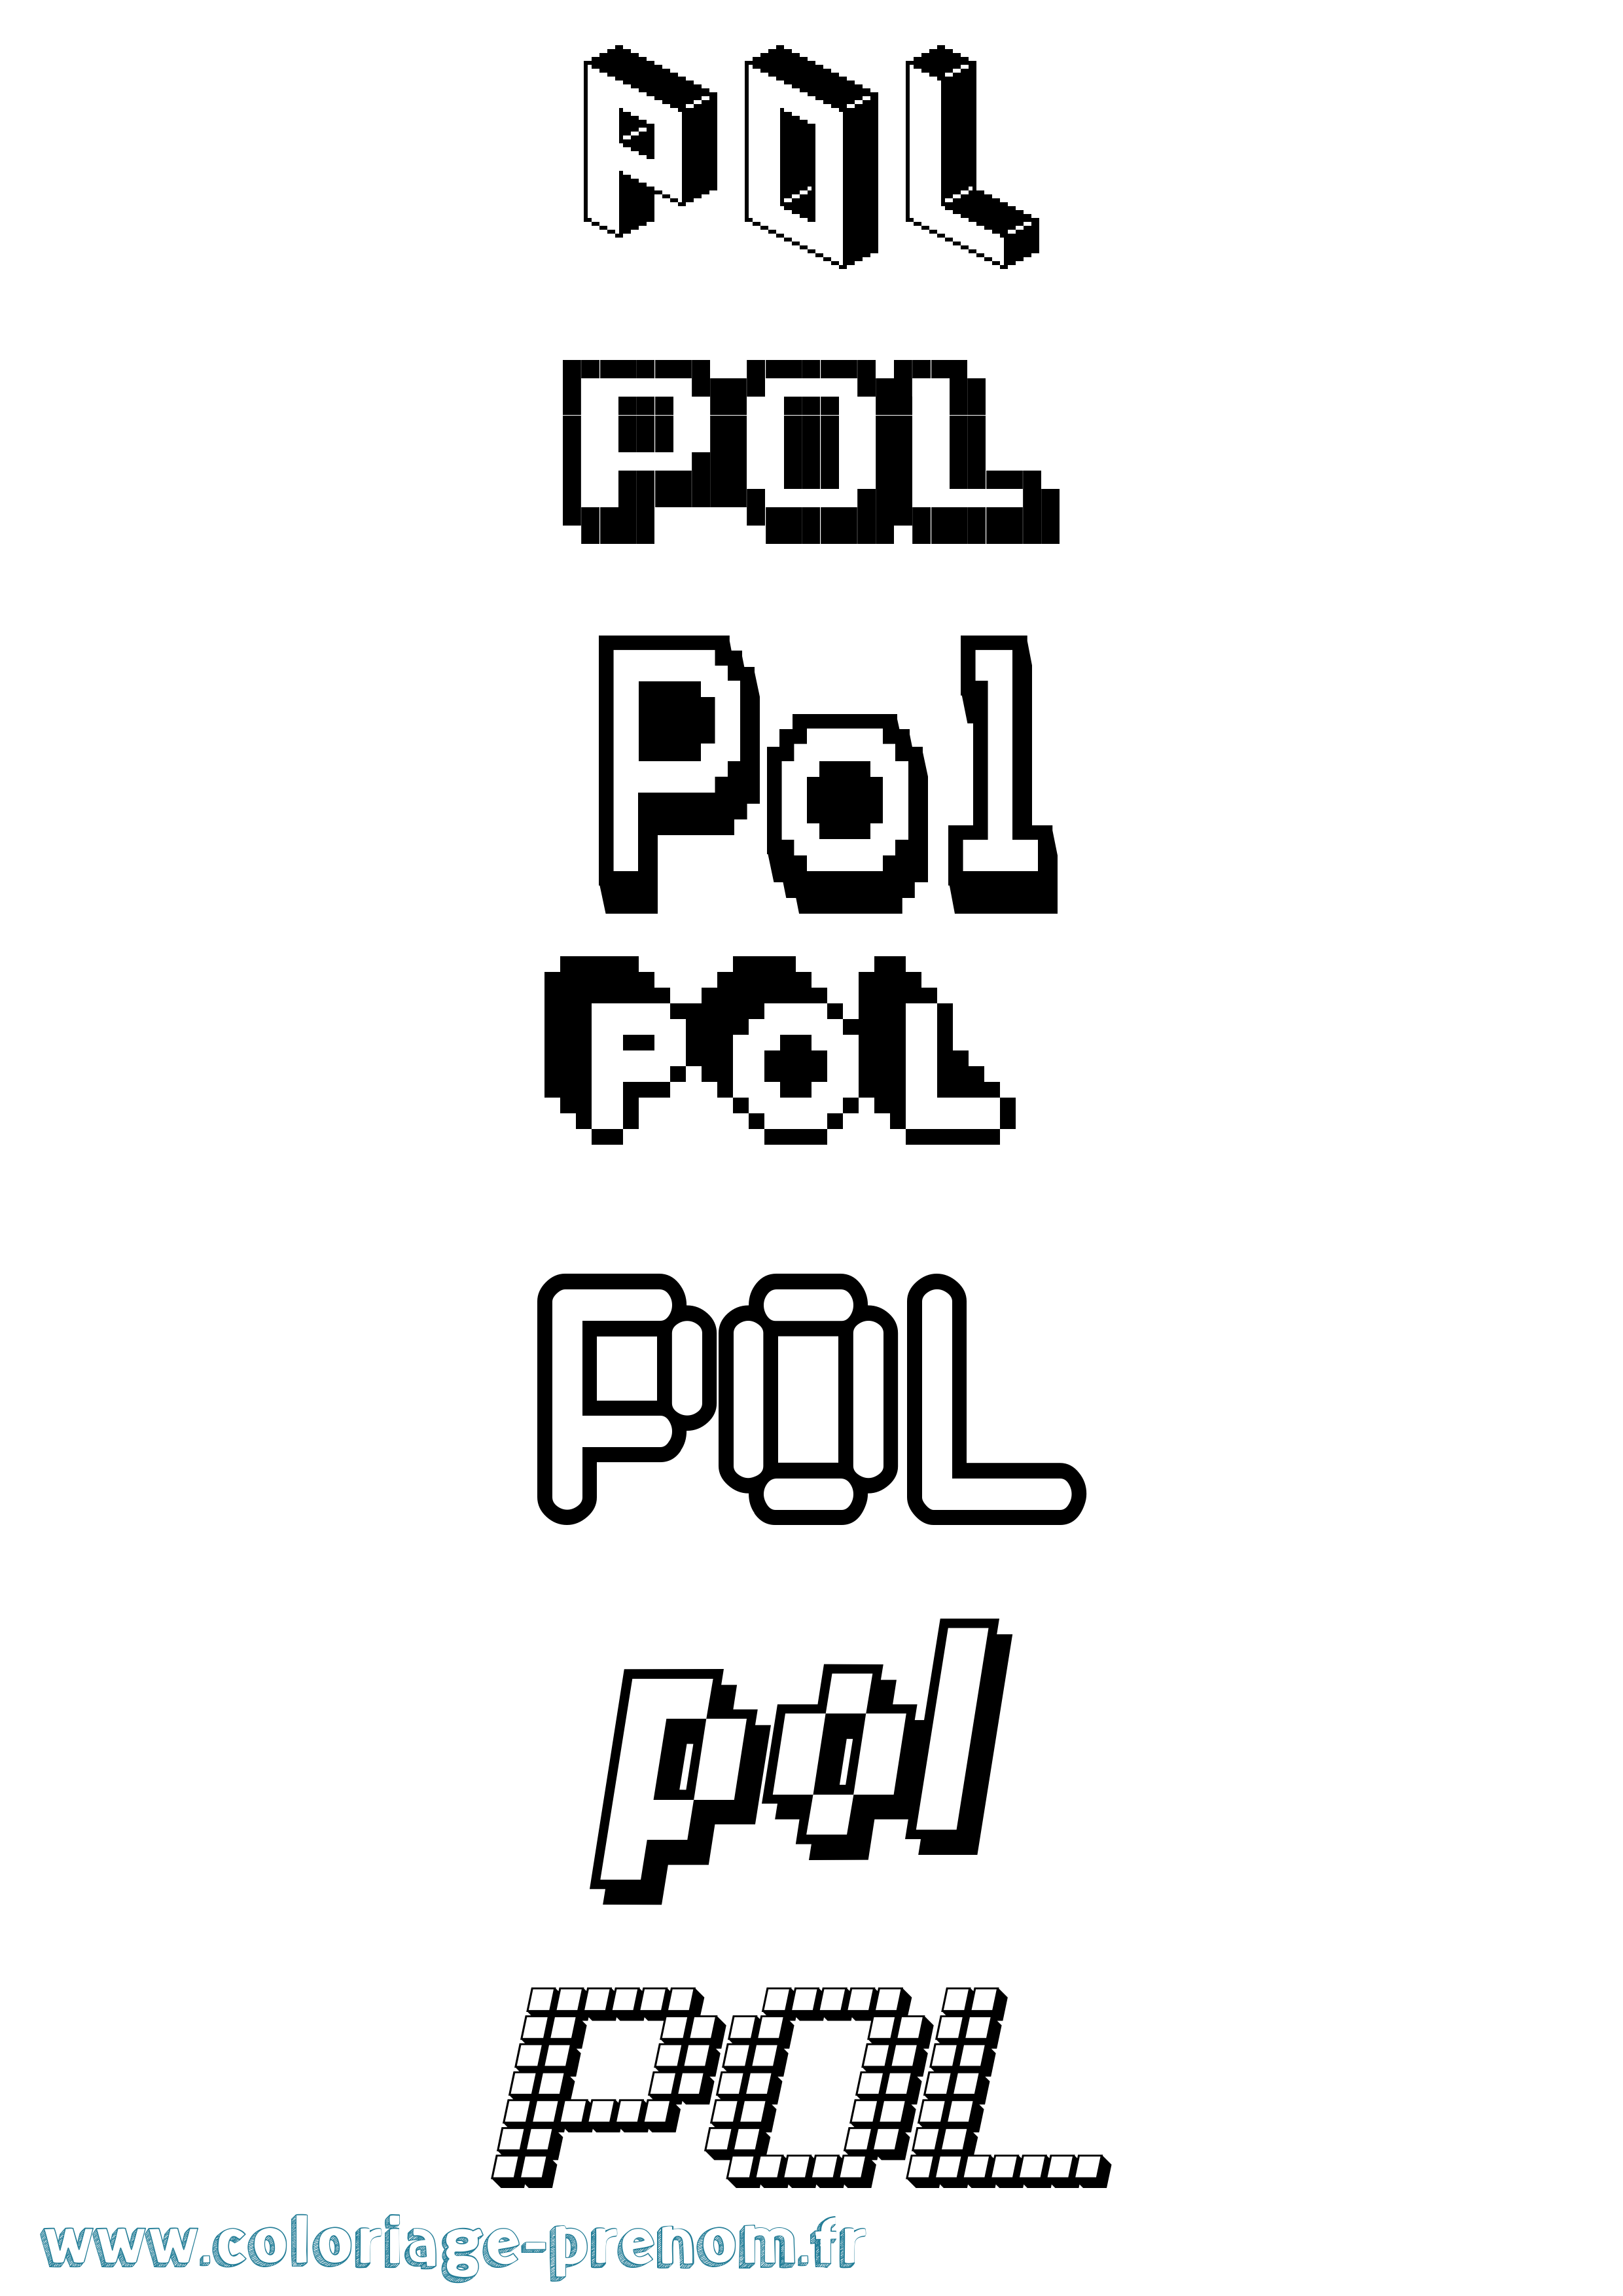 Coloriage prénom Pol Pixel